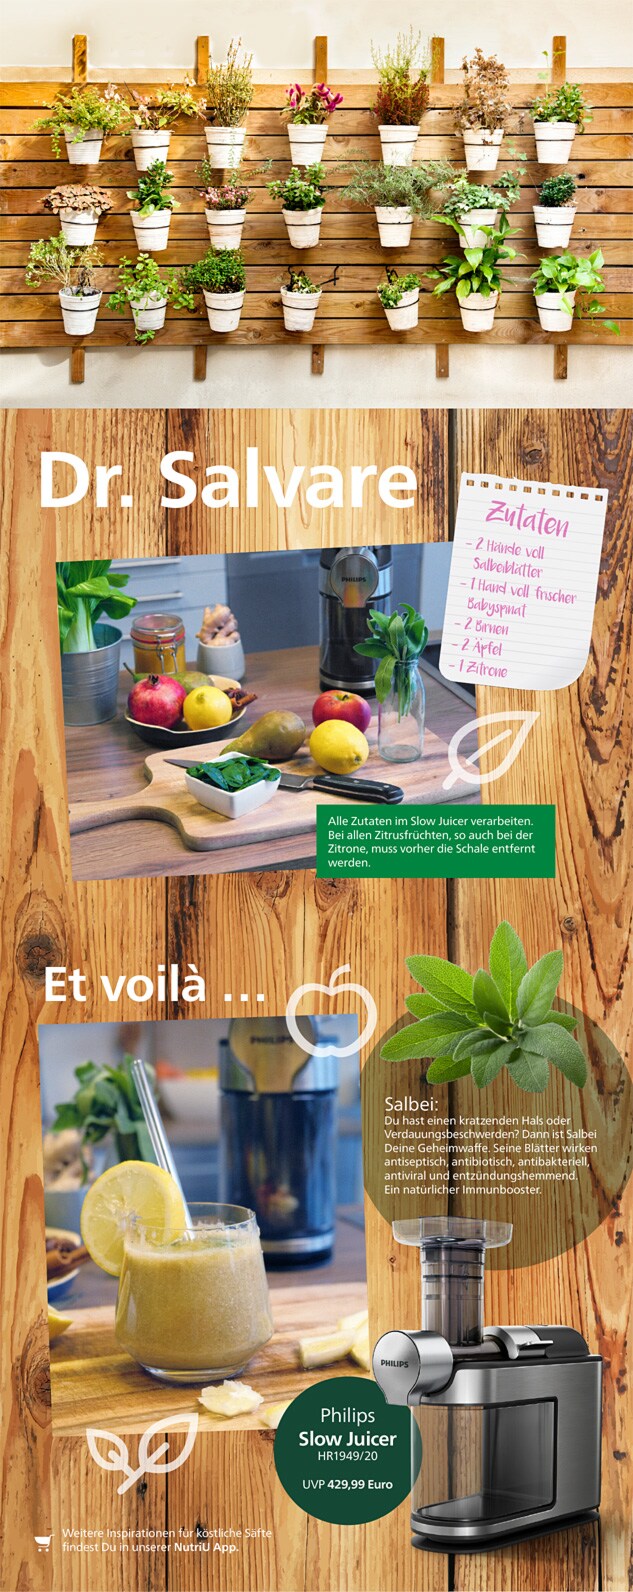 Philips DA Themensheet - Dr. Salvare